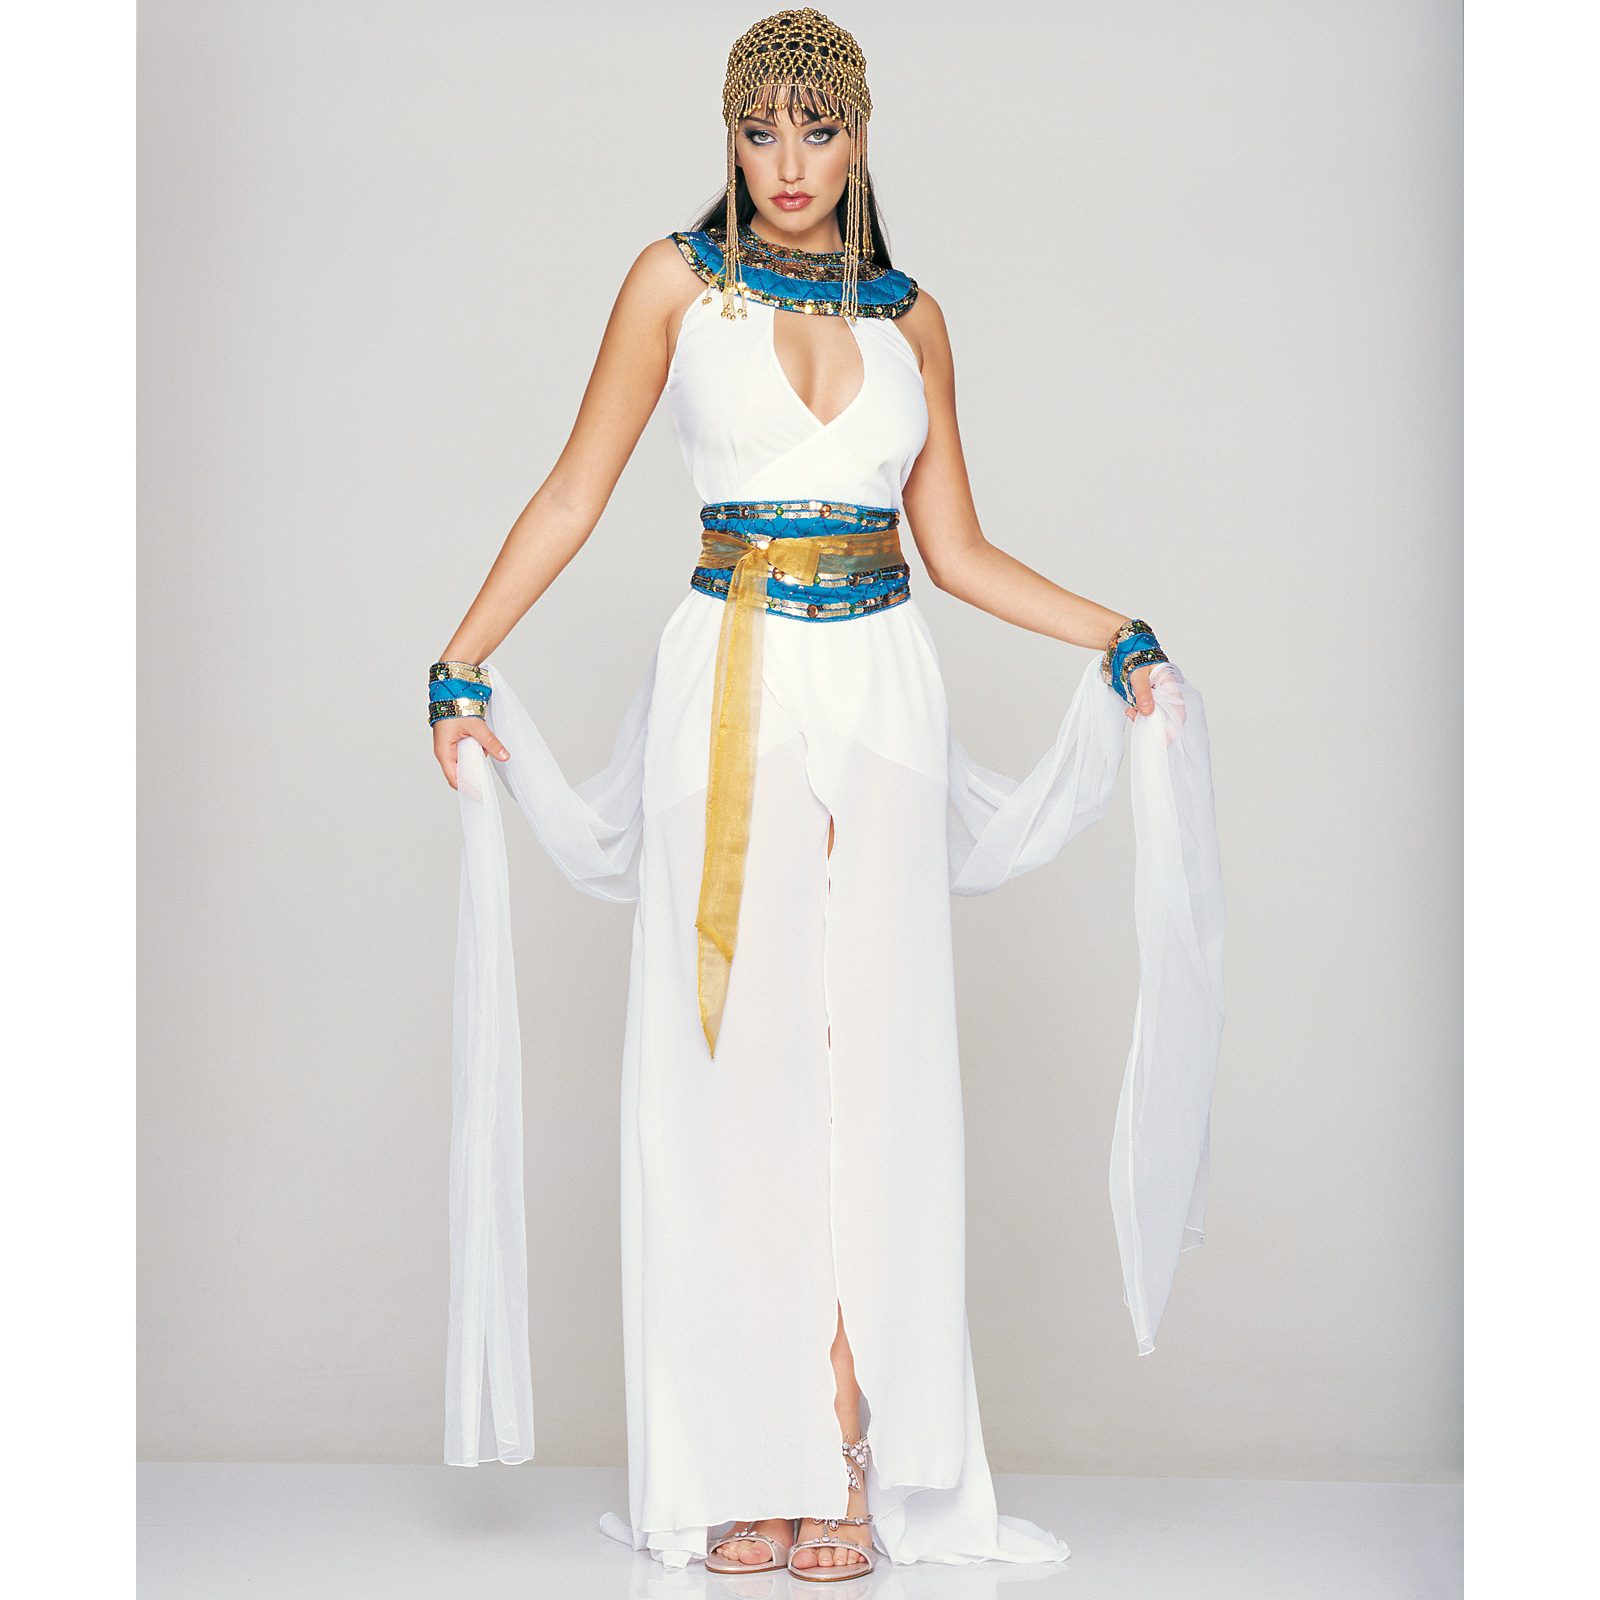 Leg Avenue Women's Cleopatra Costume - Medium/Large